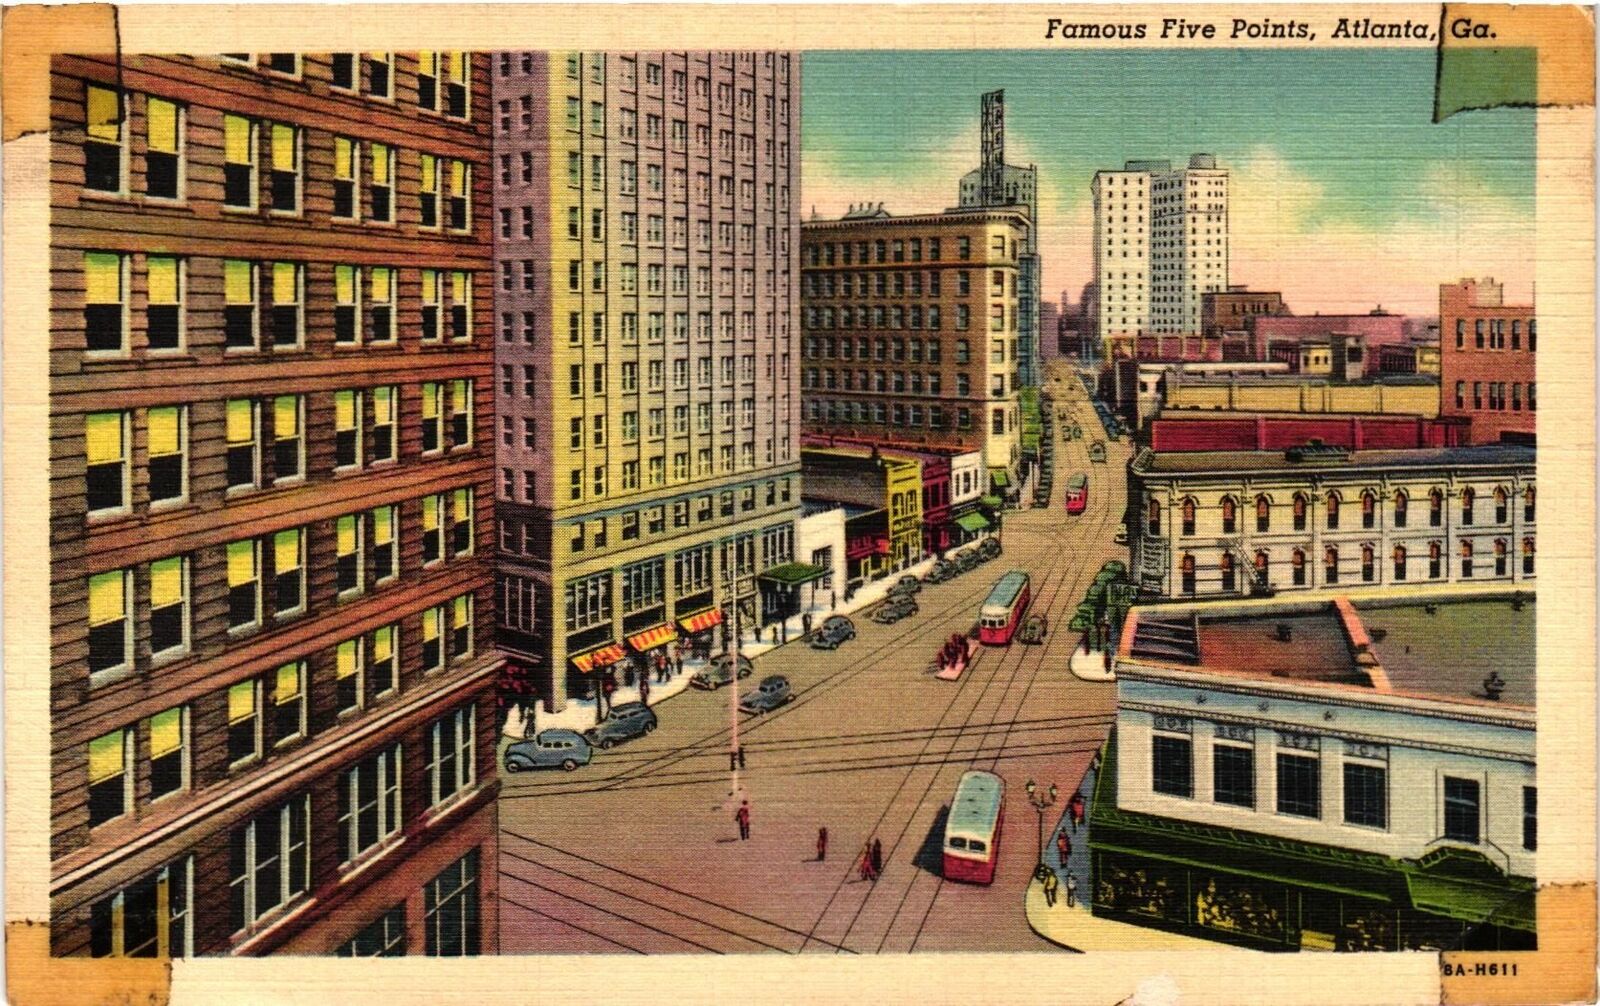 Vintage Postcard- Famous Five Points, Atlanta, GA. Early 1900s